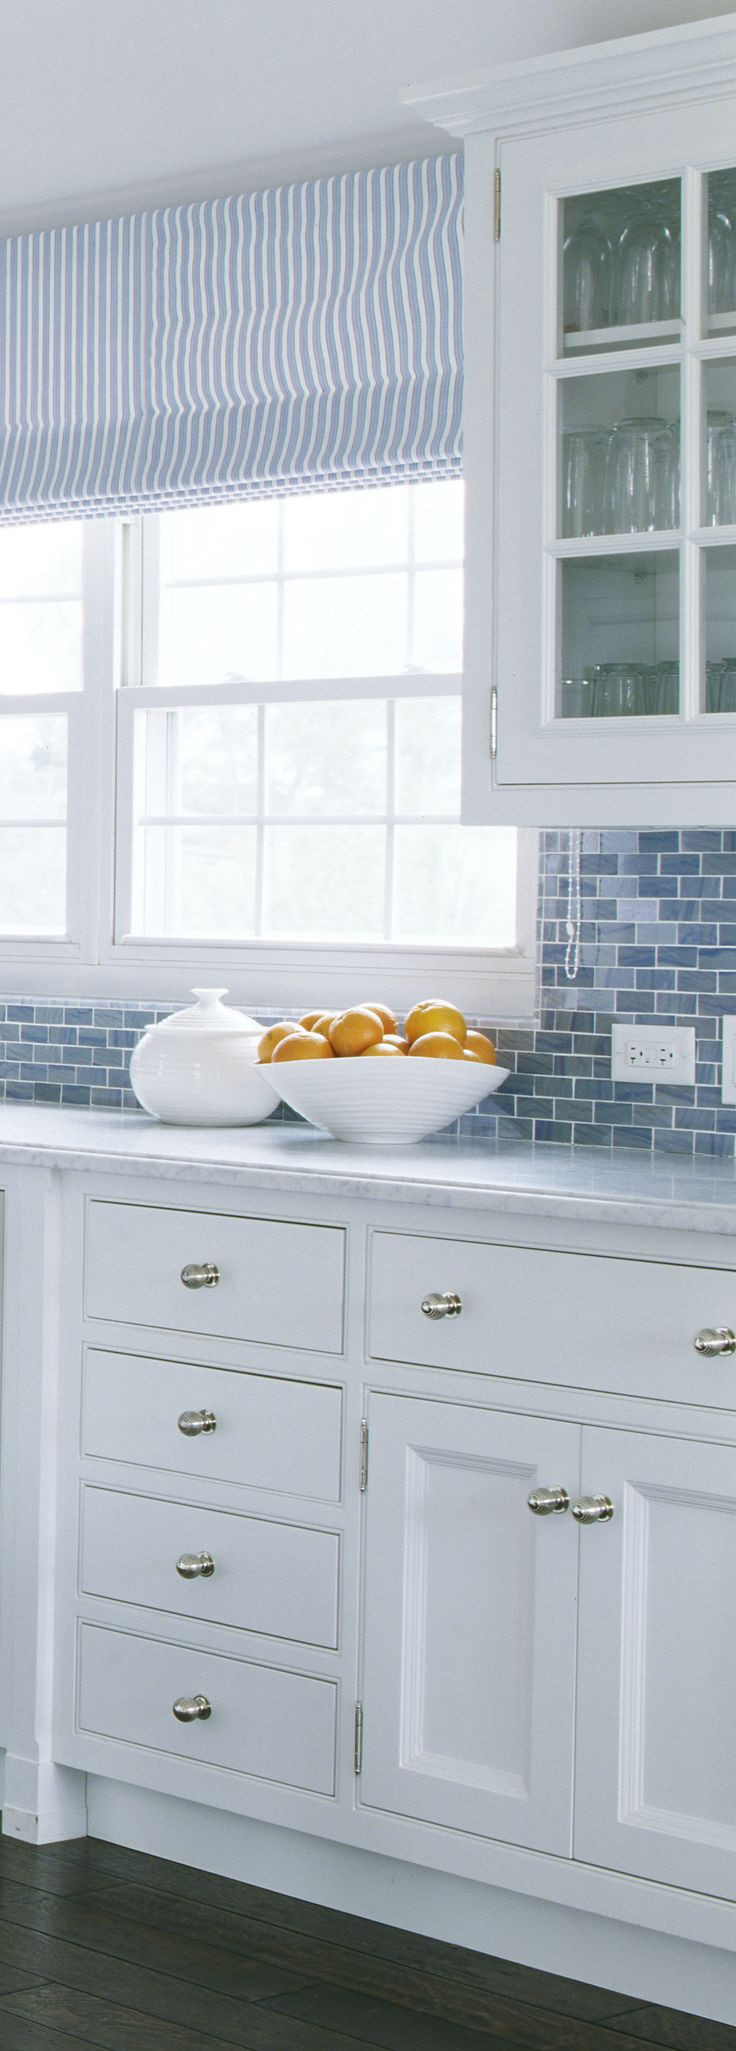 Blue Kitchen Tile Backsplash
 Coastal Kitchen Hardware Check